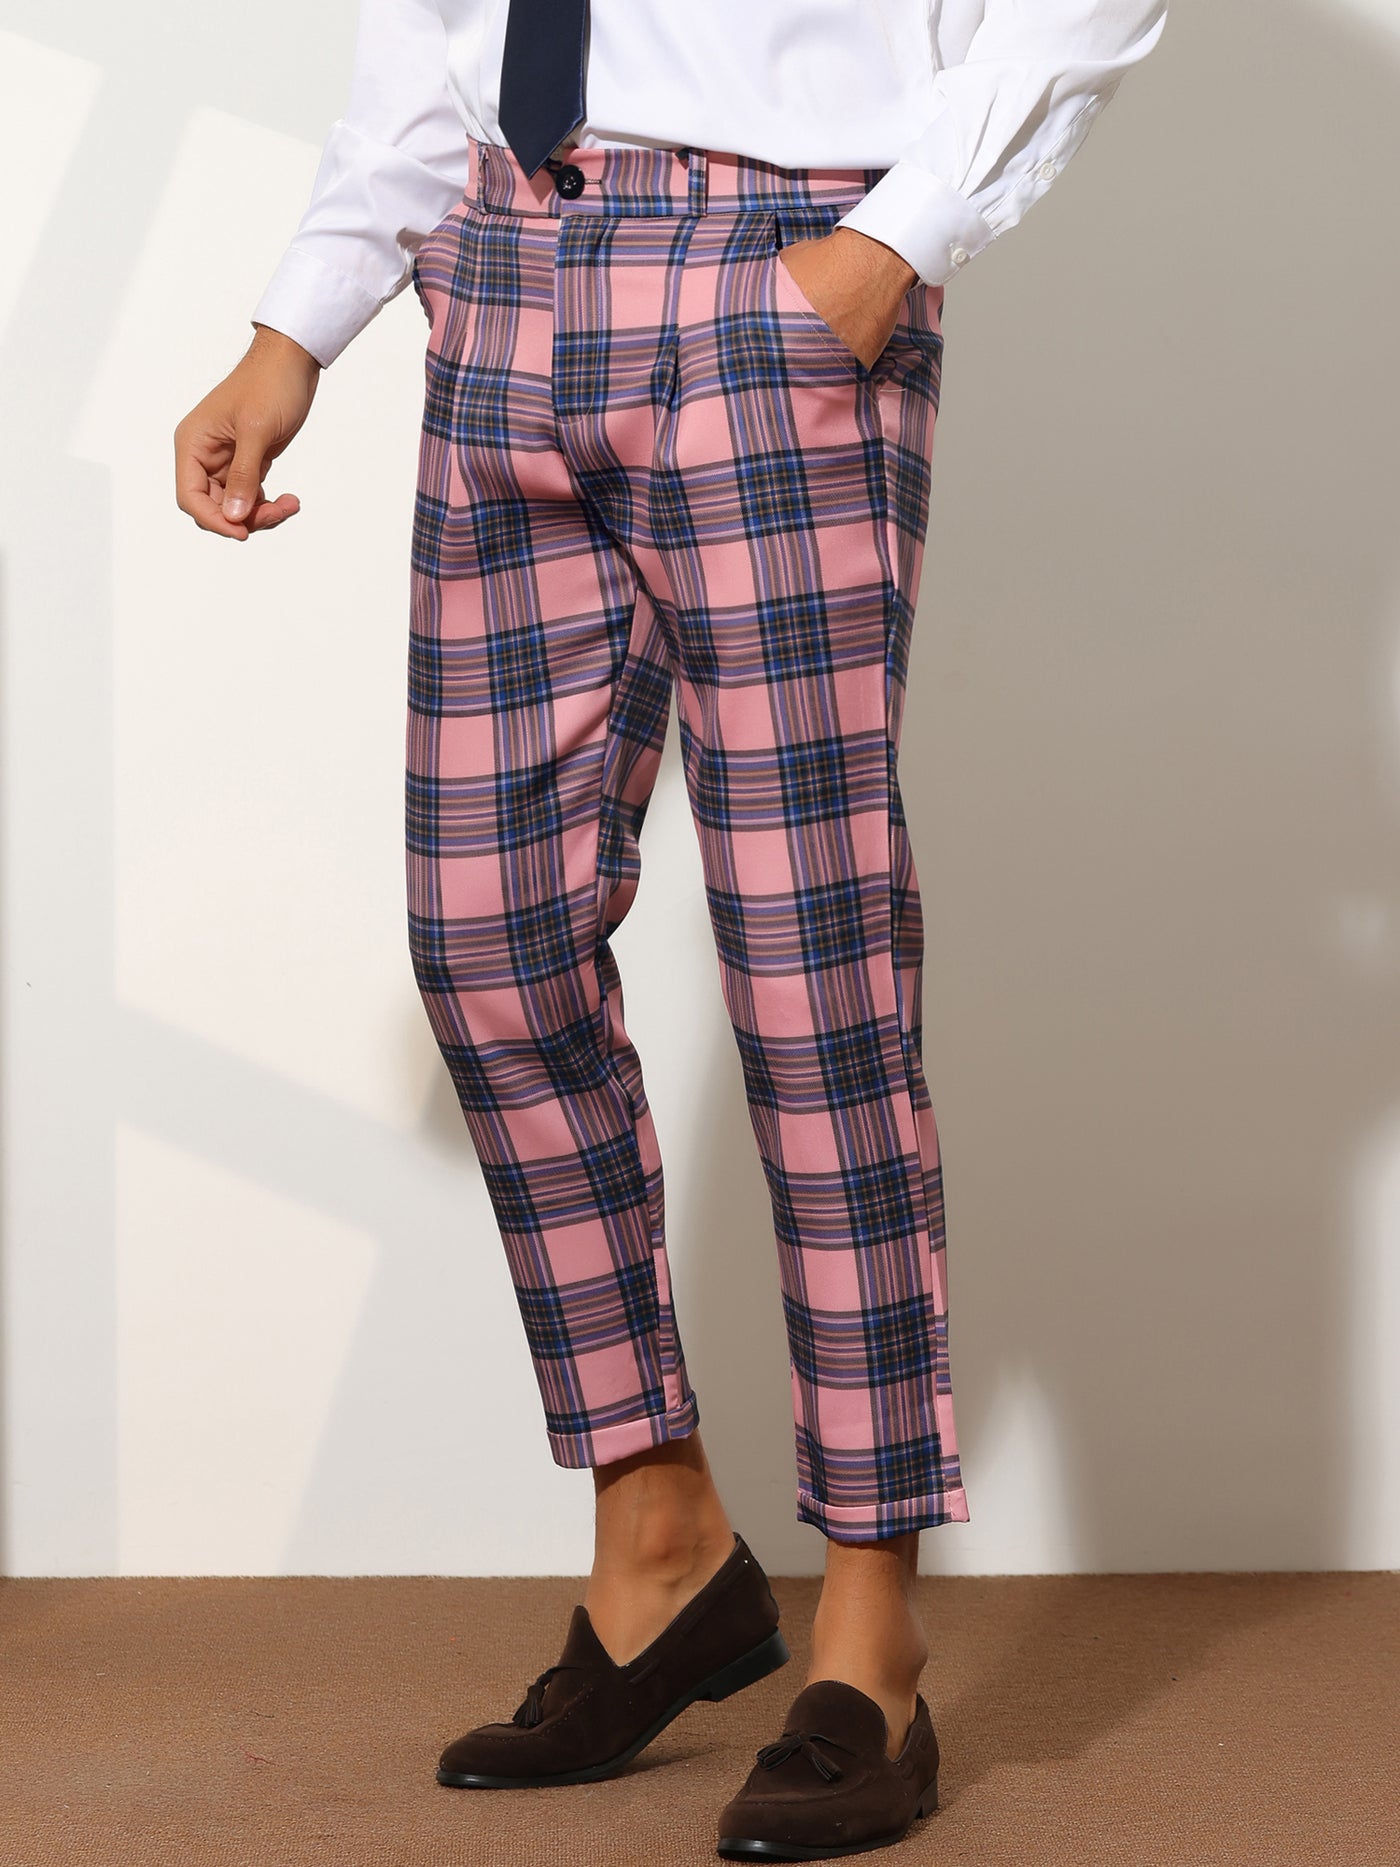 Bublédon Plaid Dress Pants for Men's Ankle Length Checked Business Trousers